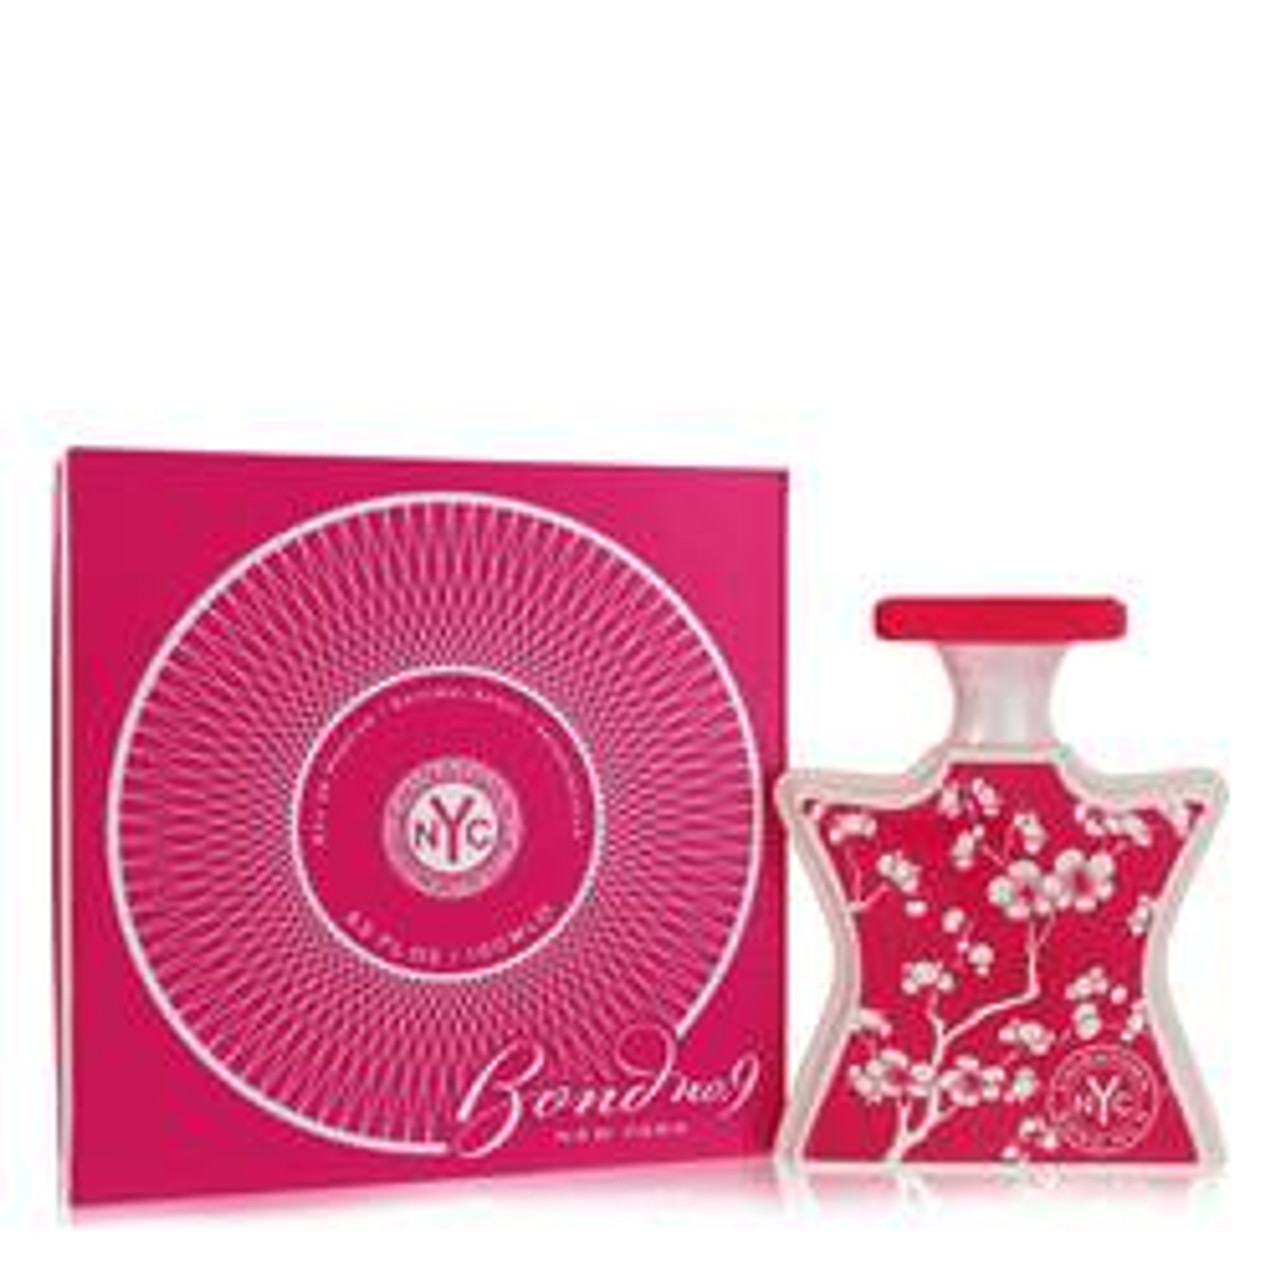 Chinatown Perfume By Bond No. 9 Eau De Parfum Spray 3.3 oz for Women - *Pre-Order